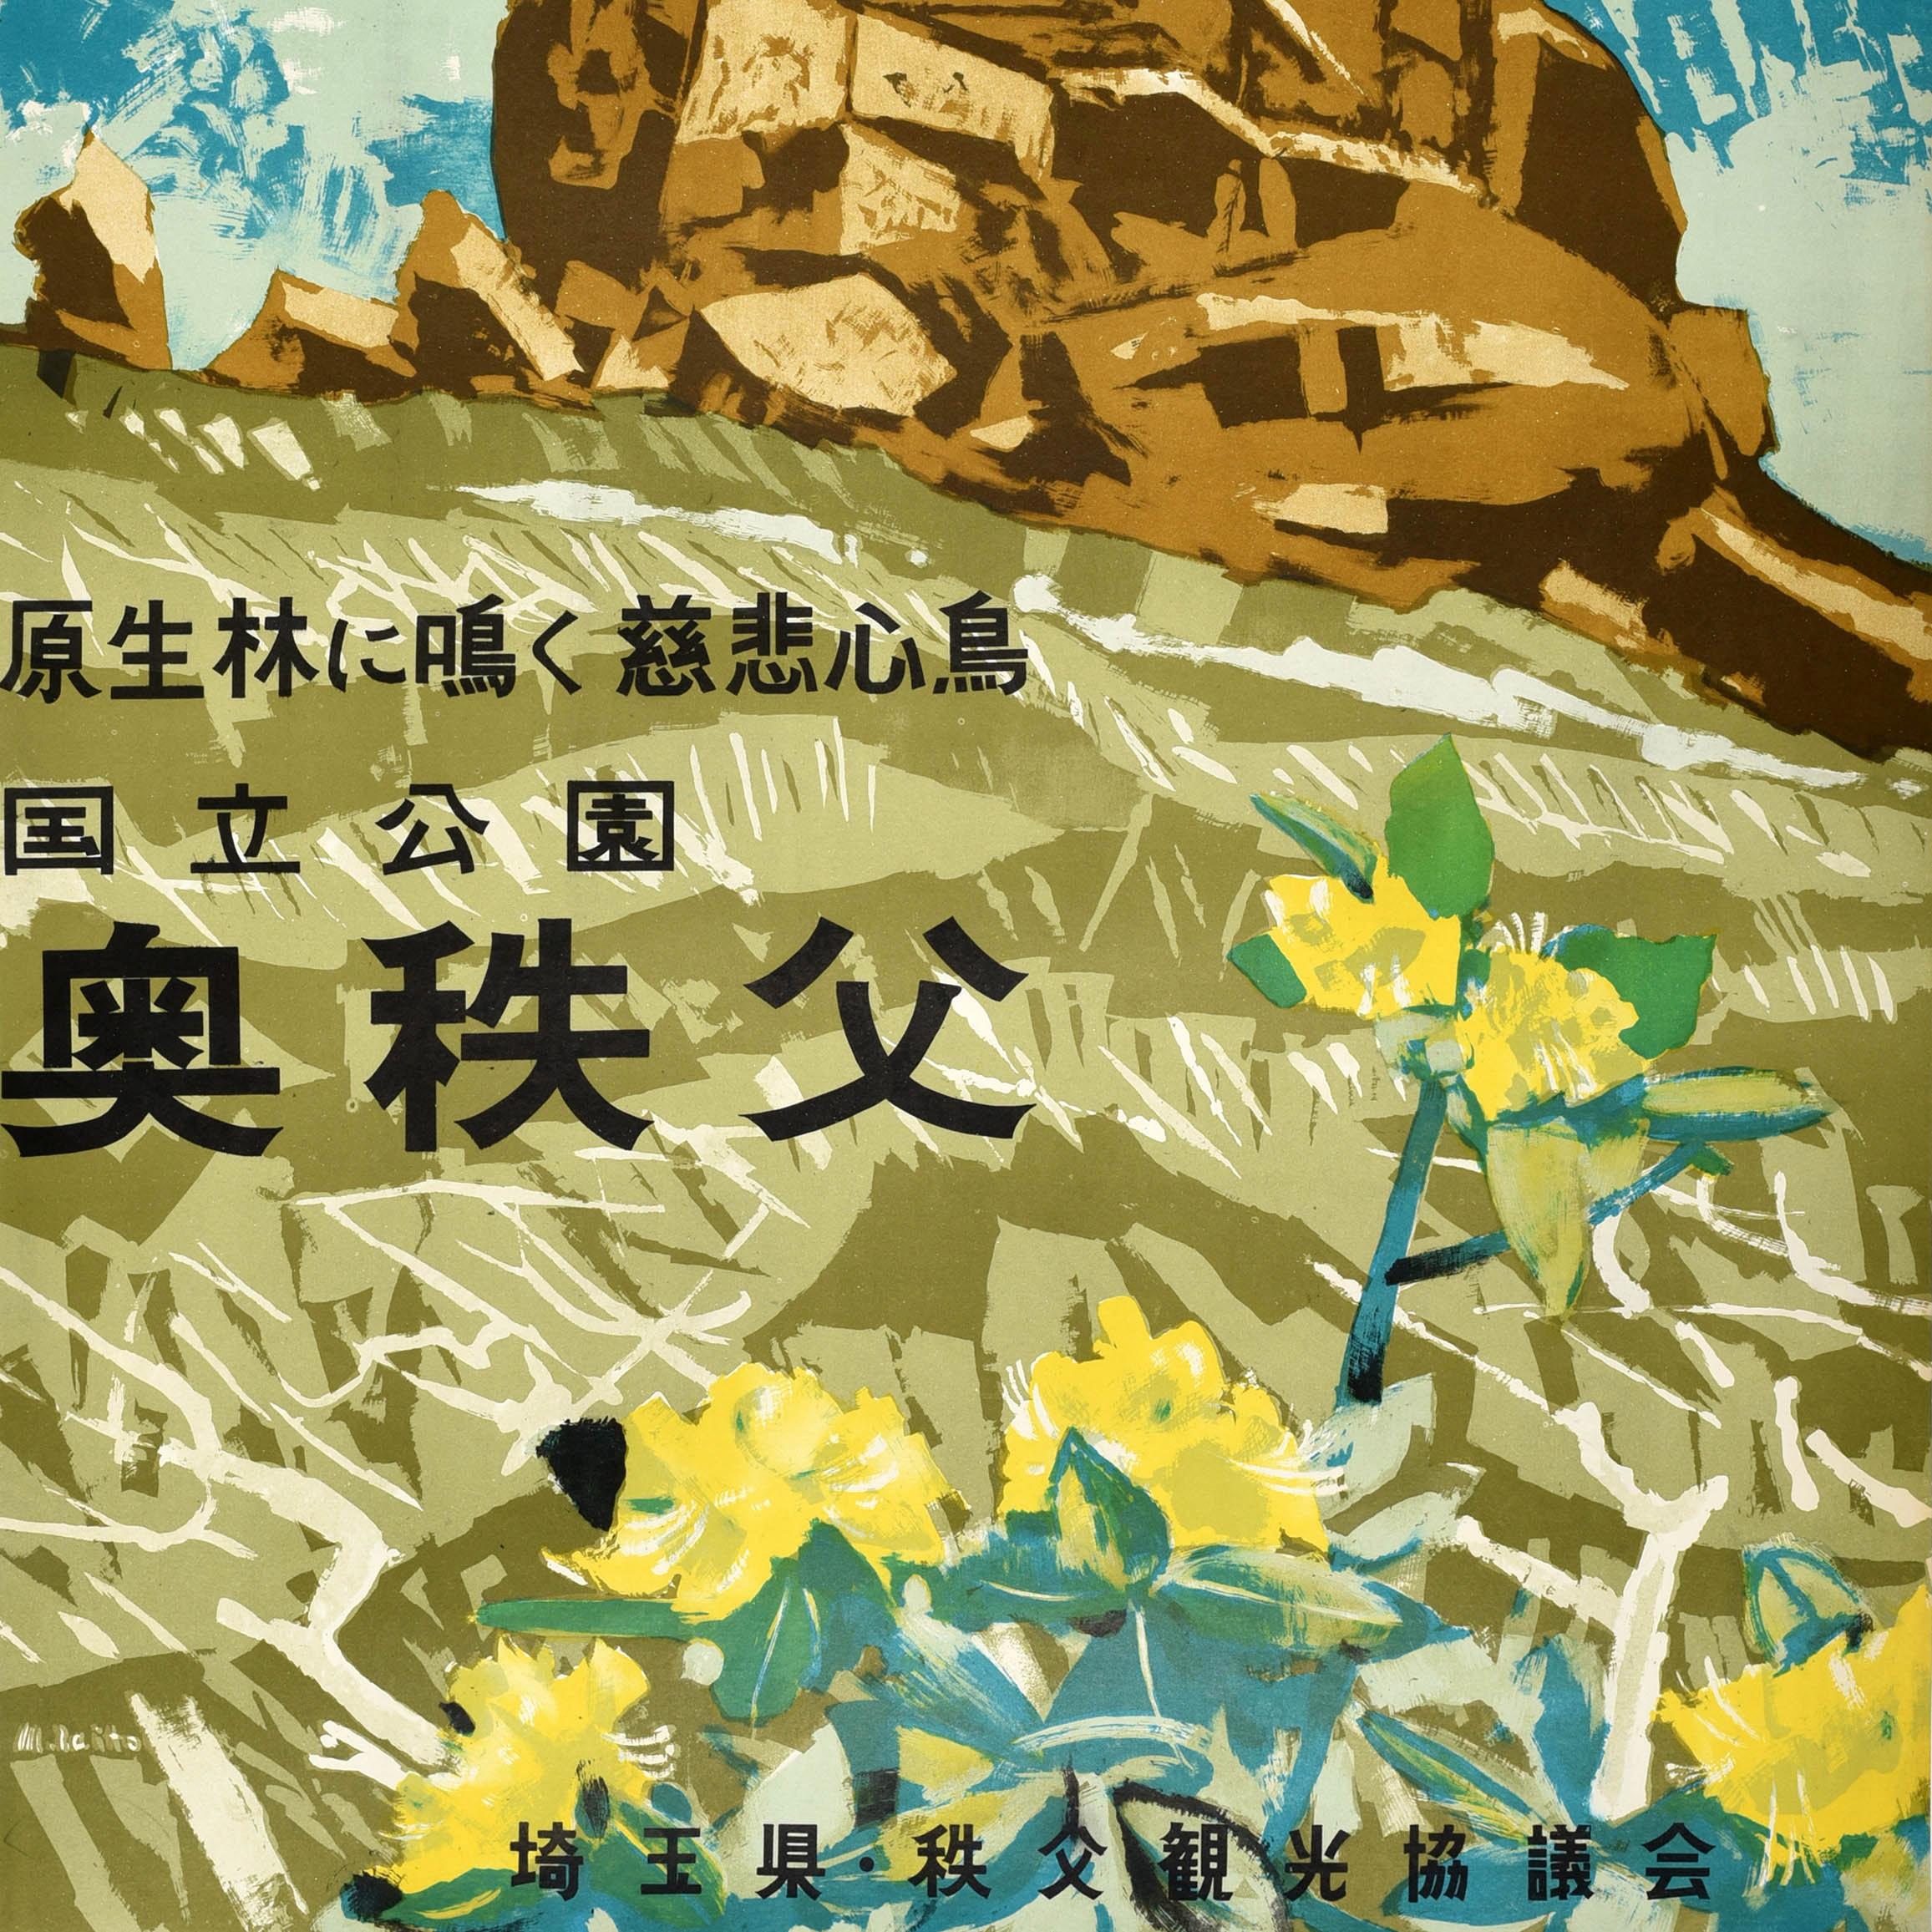 Original Vintage Asia Travel Poster Japan Okuchichibu Tama Kai National Park - Beige Print by Unknown